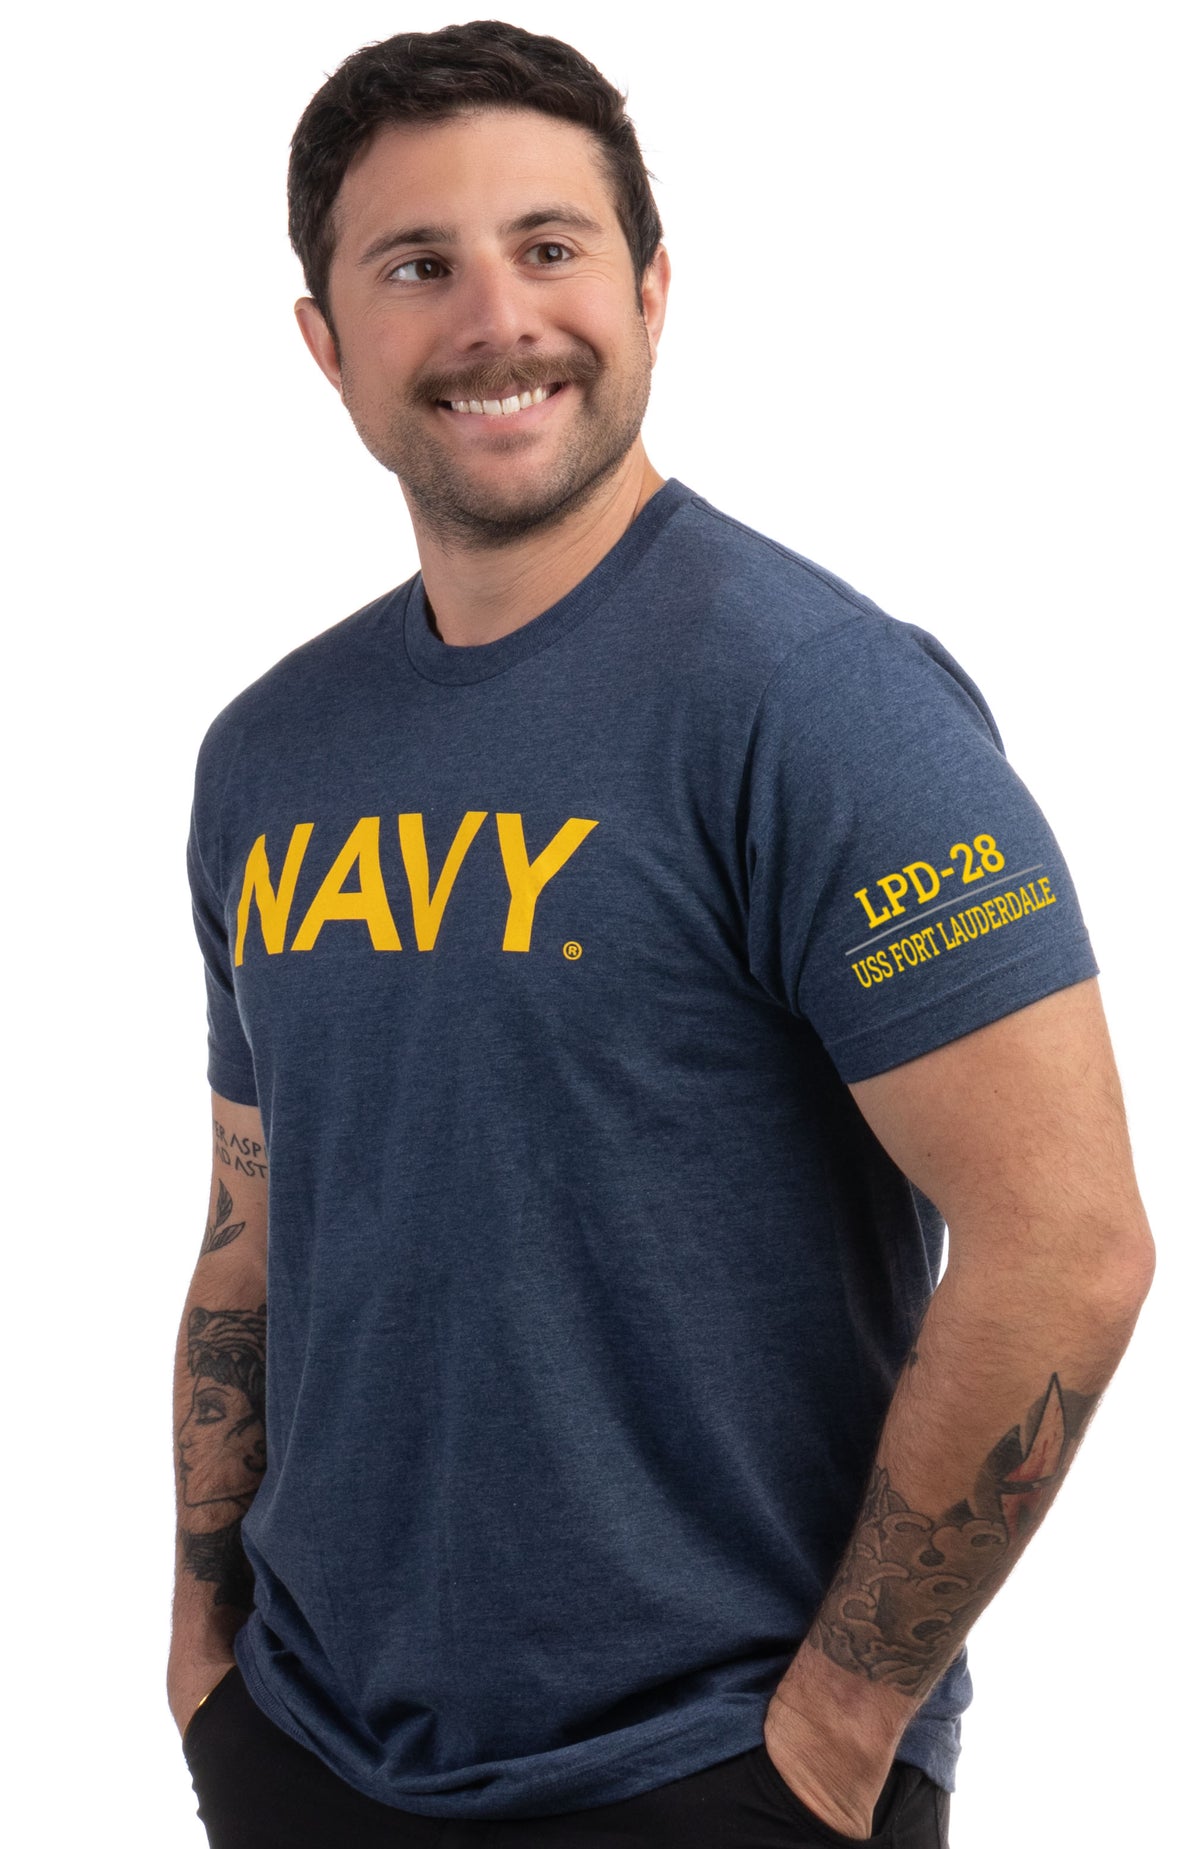 USS Fort Lauderdale, LPD-28 | U.S. Navy Sailor Veteran USN United States Naval T-shirt for Men Women